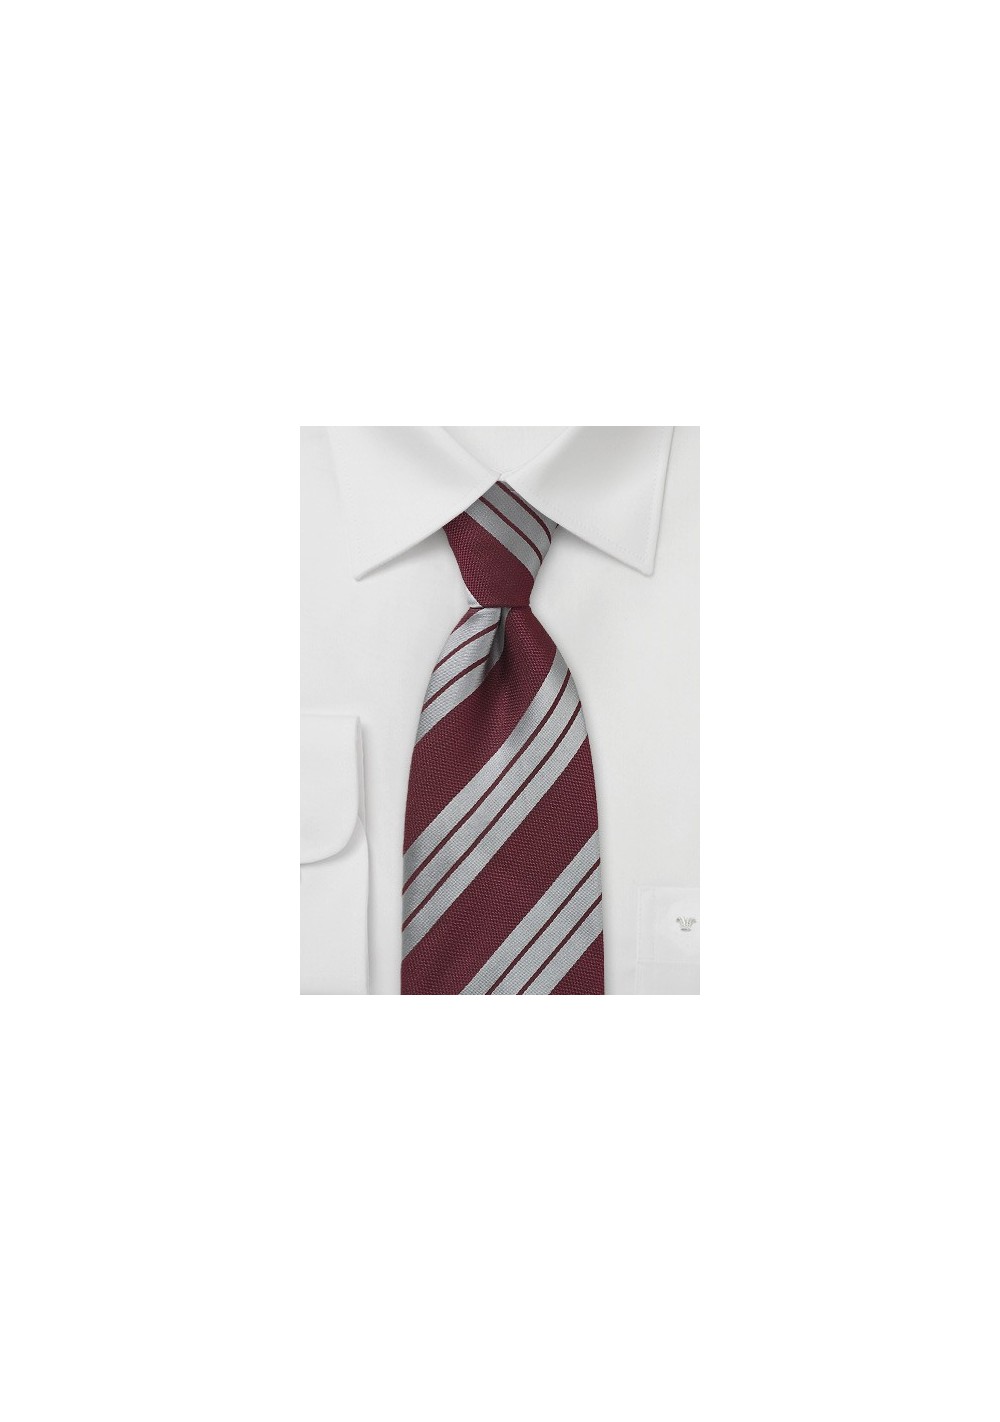 Modern Burgundy and Silver Striped Tie